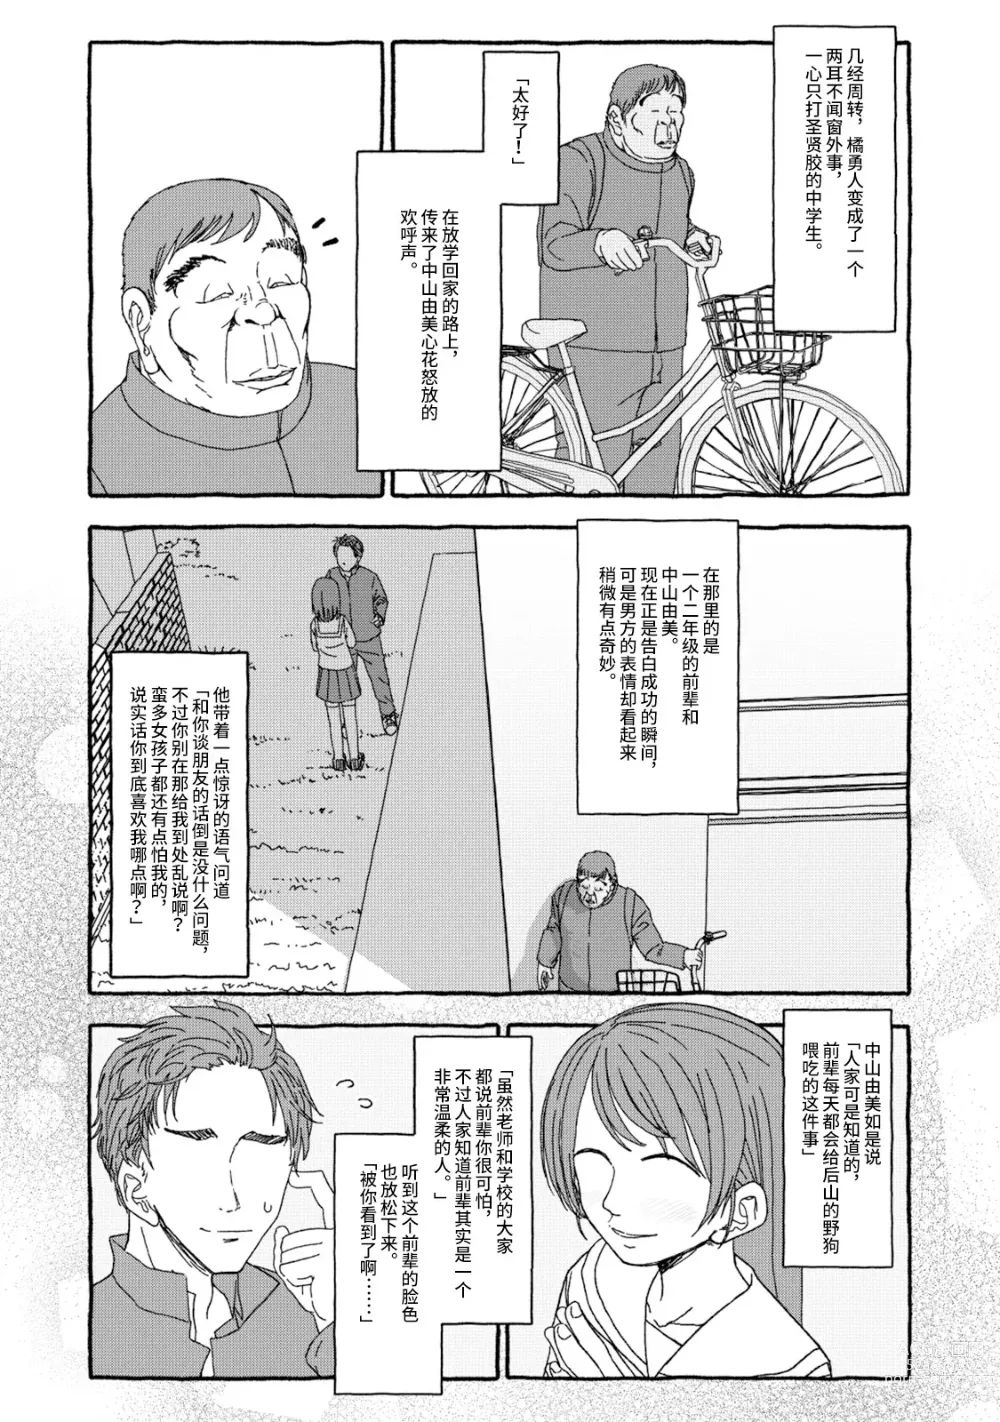 Page 13 of doujinshi 相遇四光年后合体 前篇